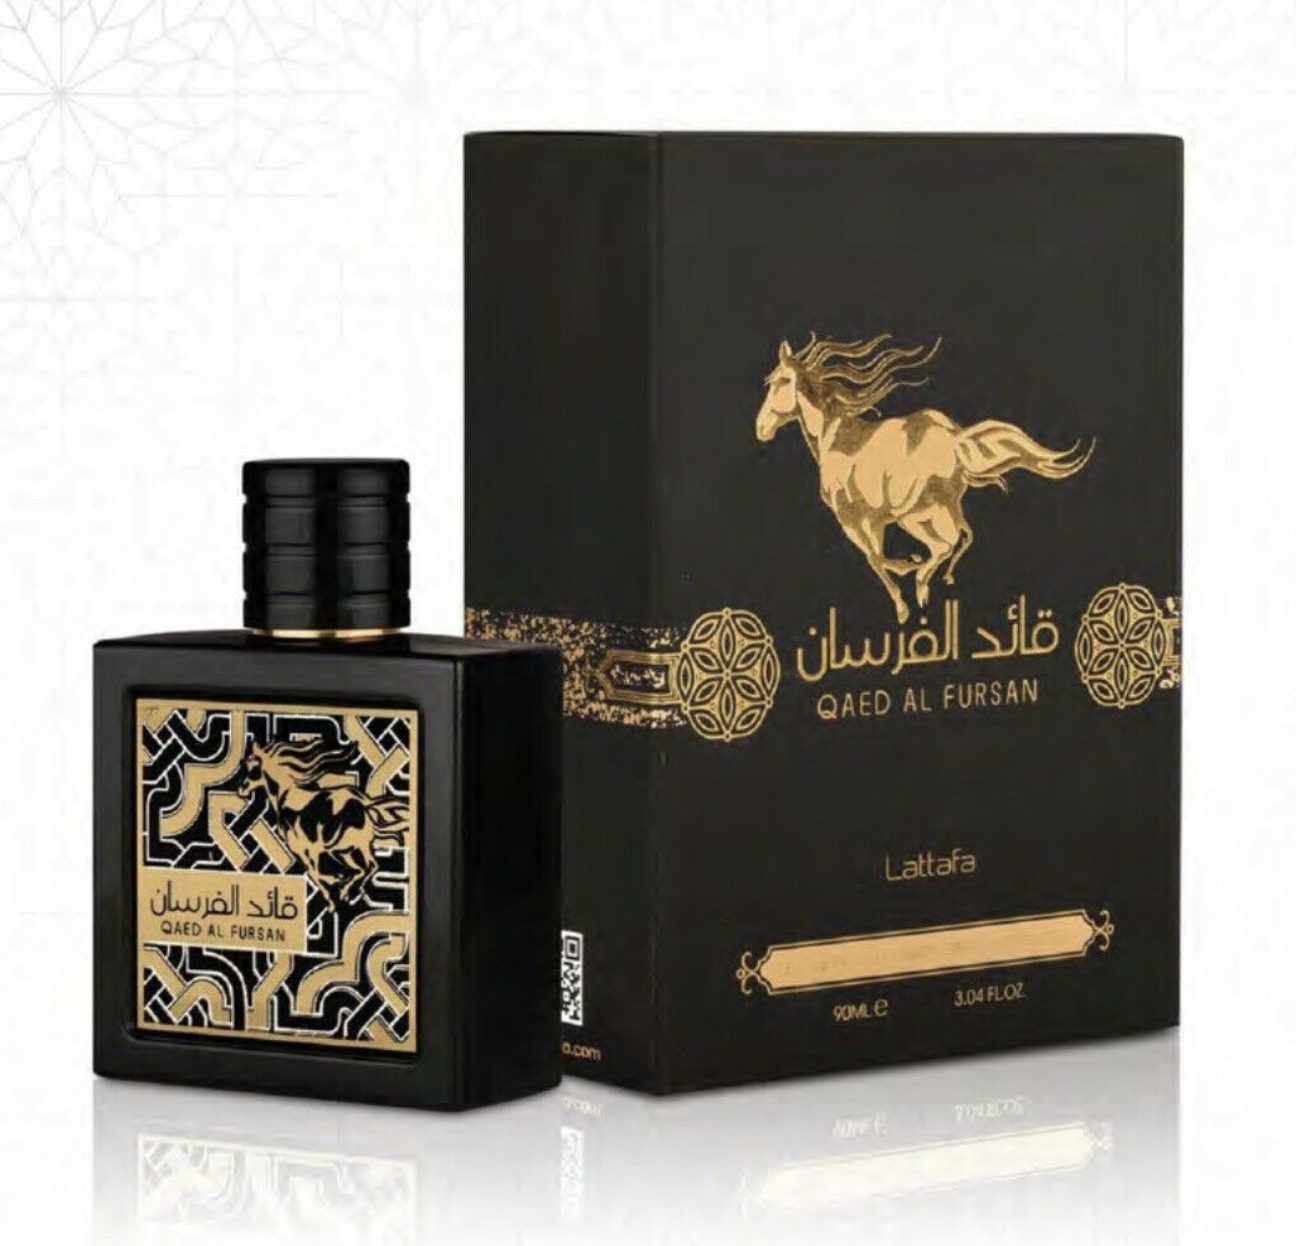 Qaed Al Fursan EDP Perfume By Lattafa 90 ML